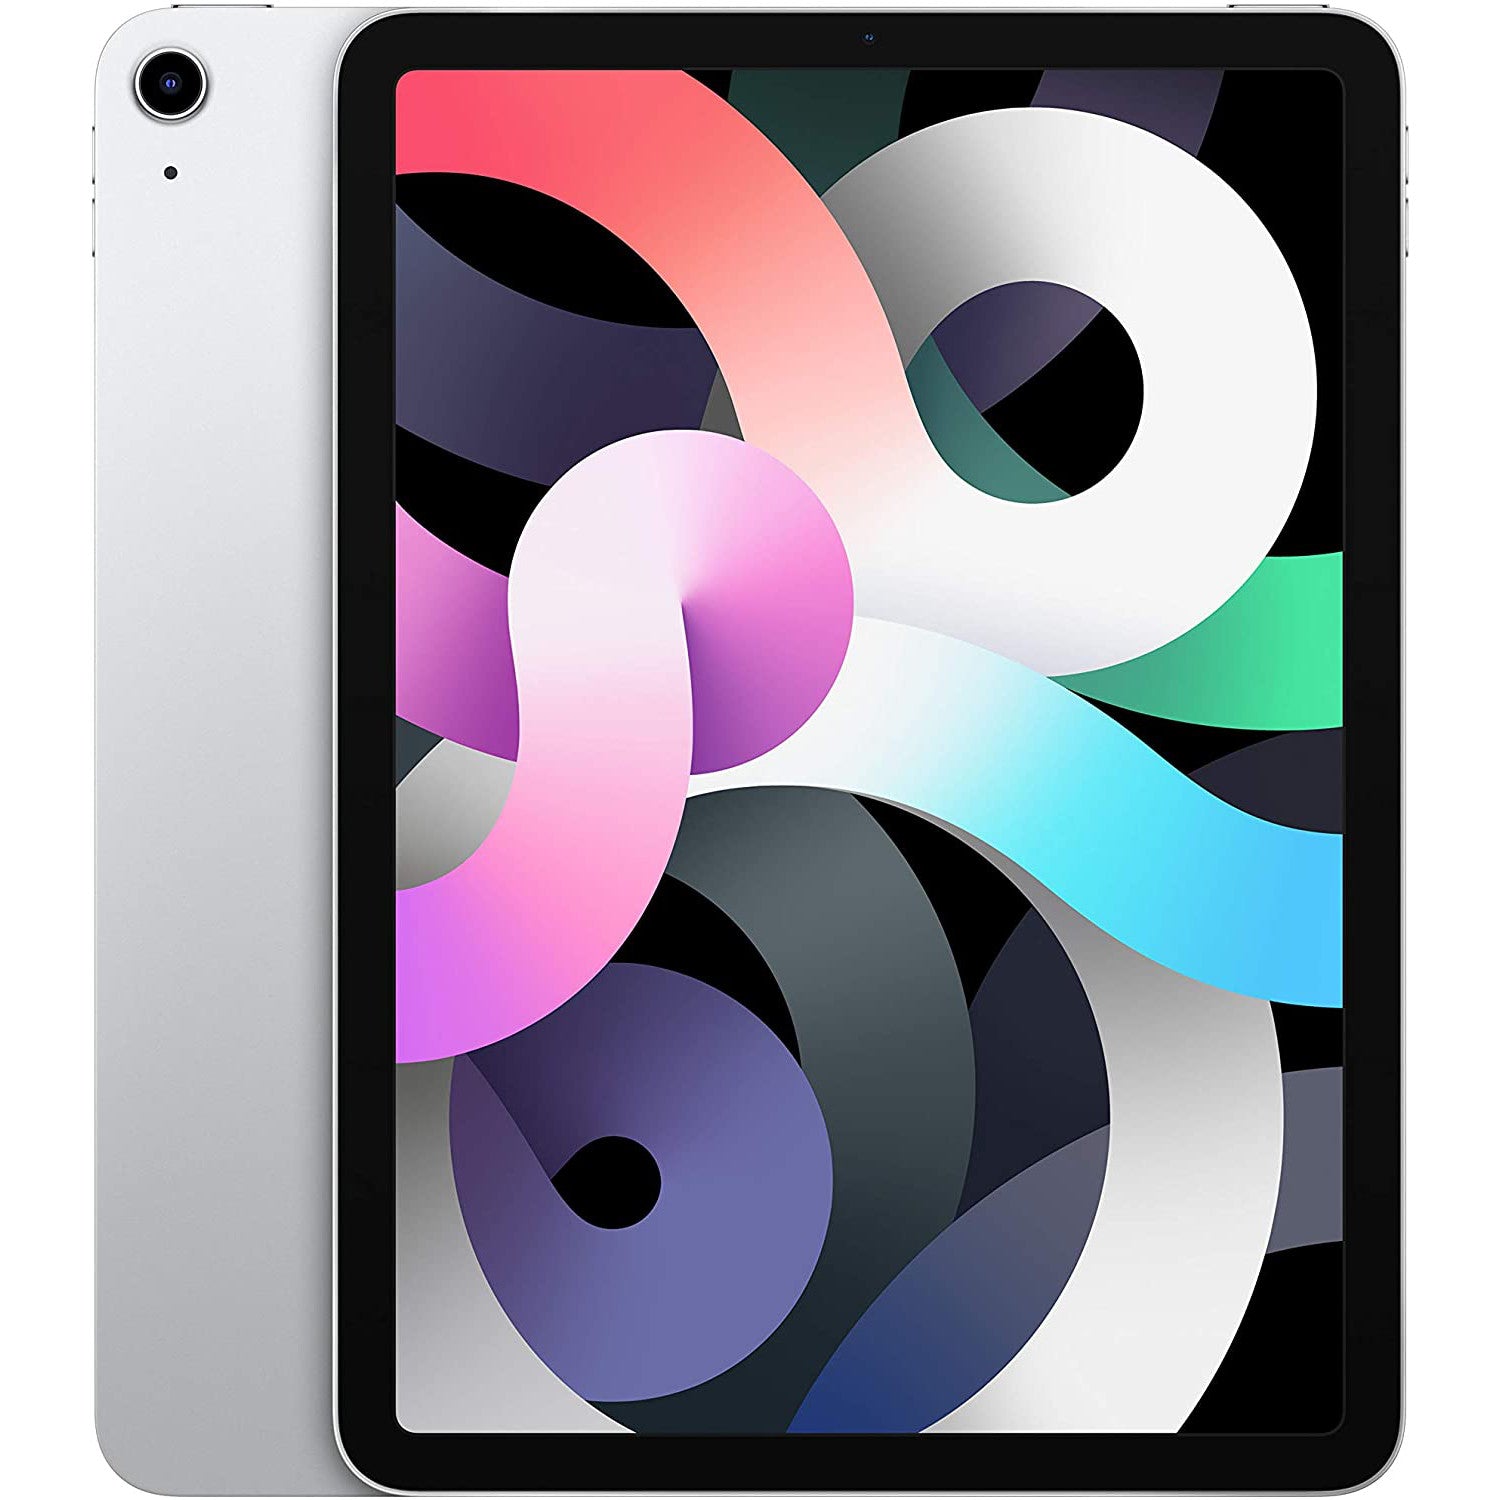 iPad Air 4 256GB WiFi - Plata - Impecable